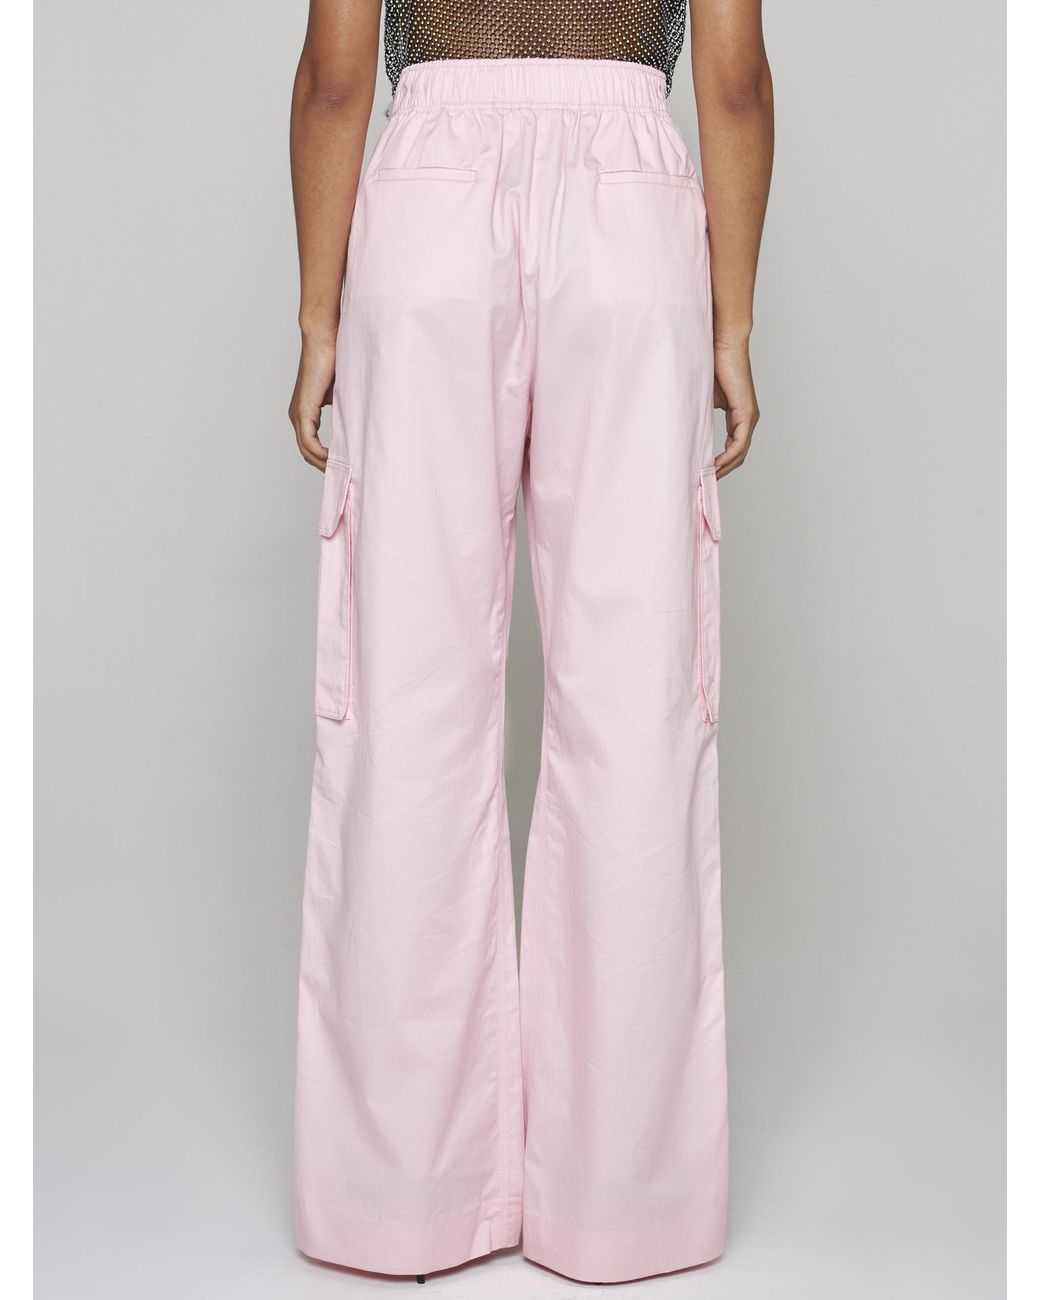 Stine Goya Fatuna Cotton Cargo Pants in Pink | Lyst